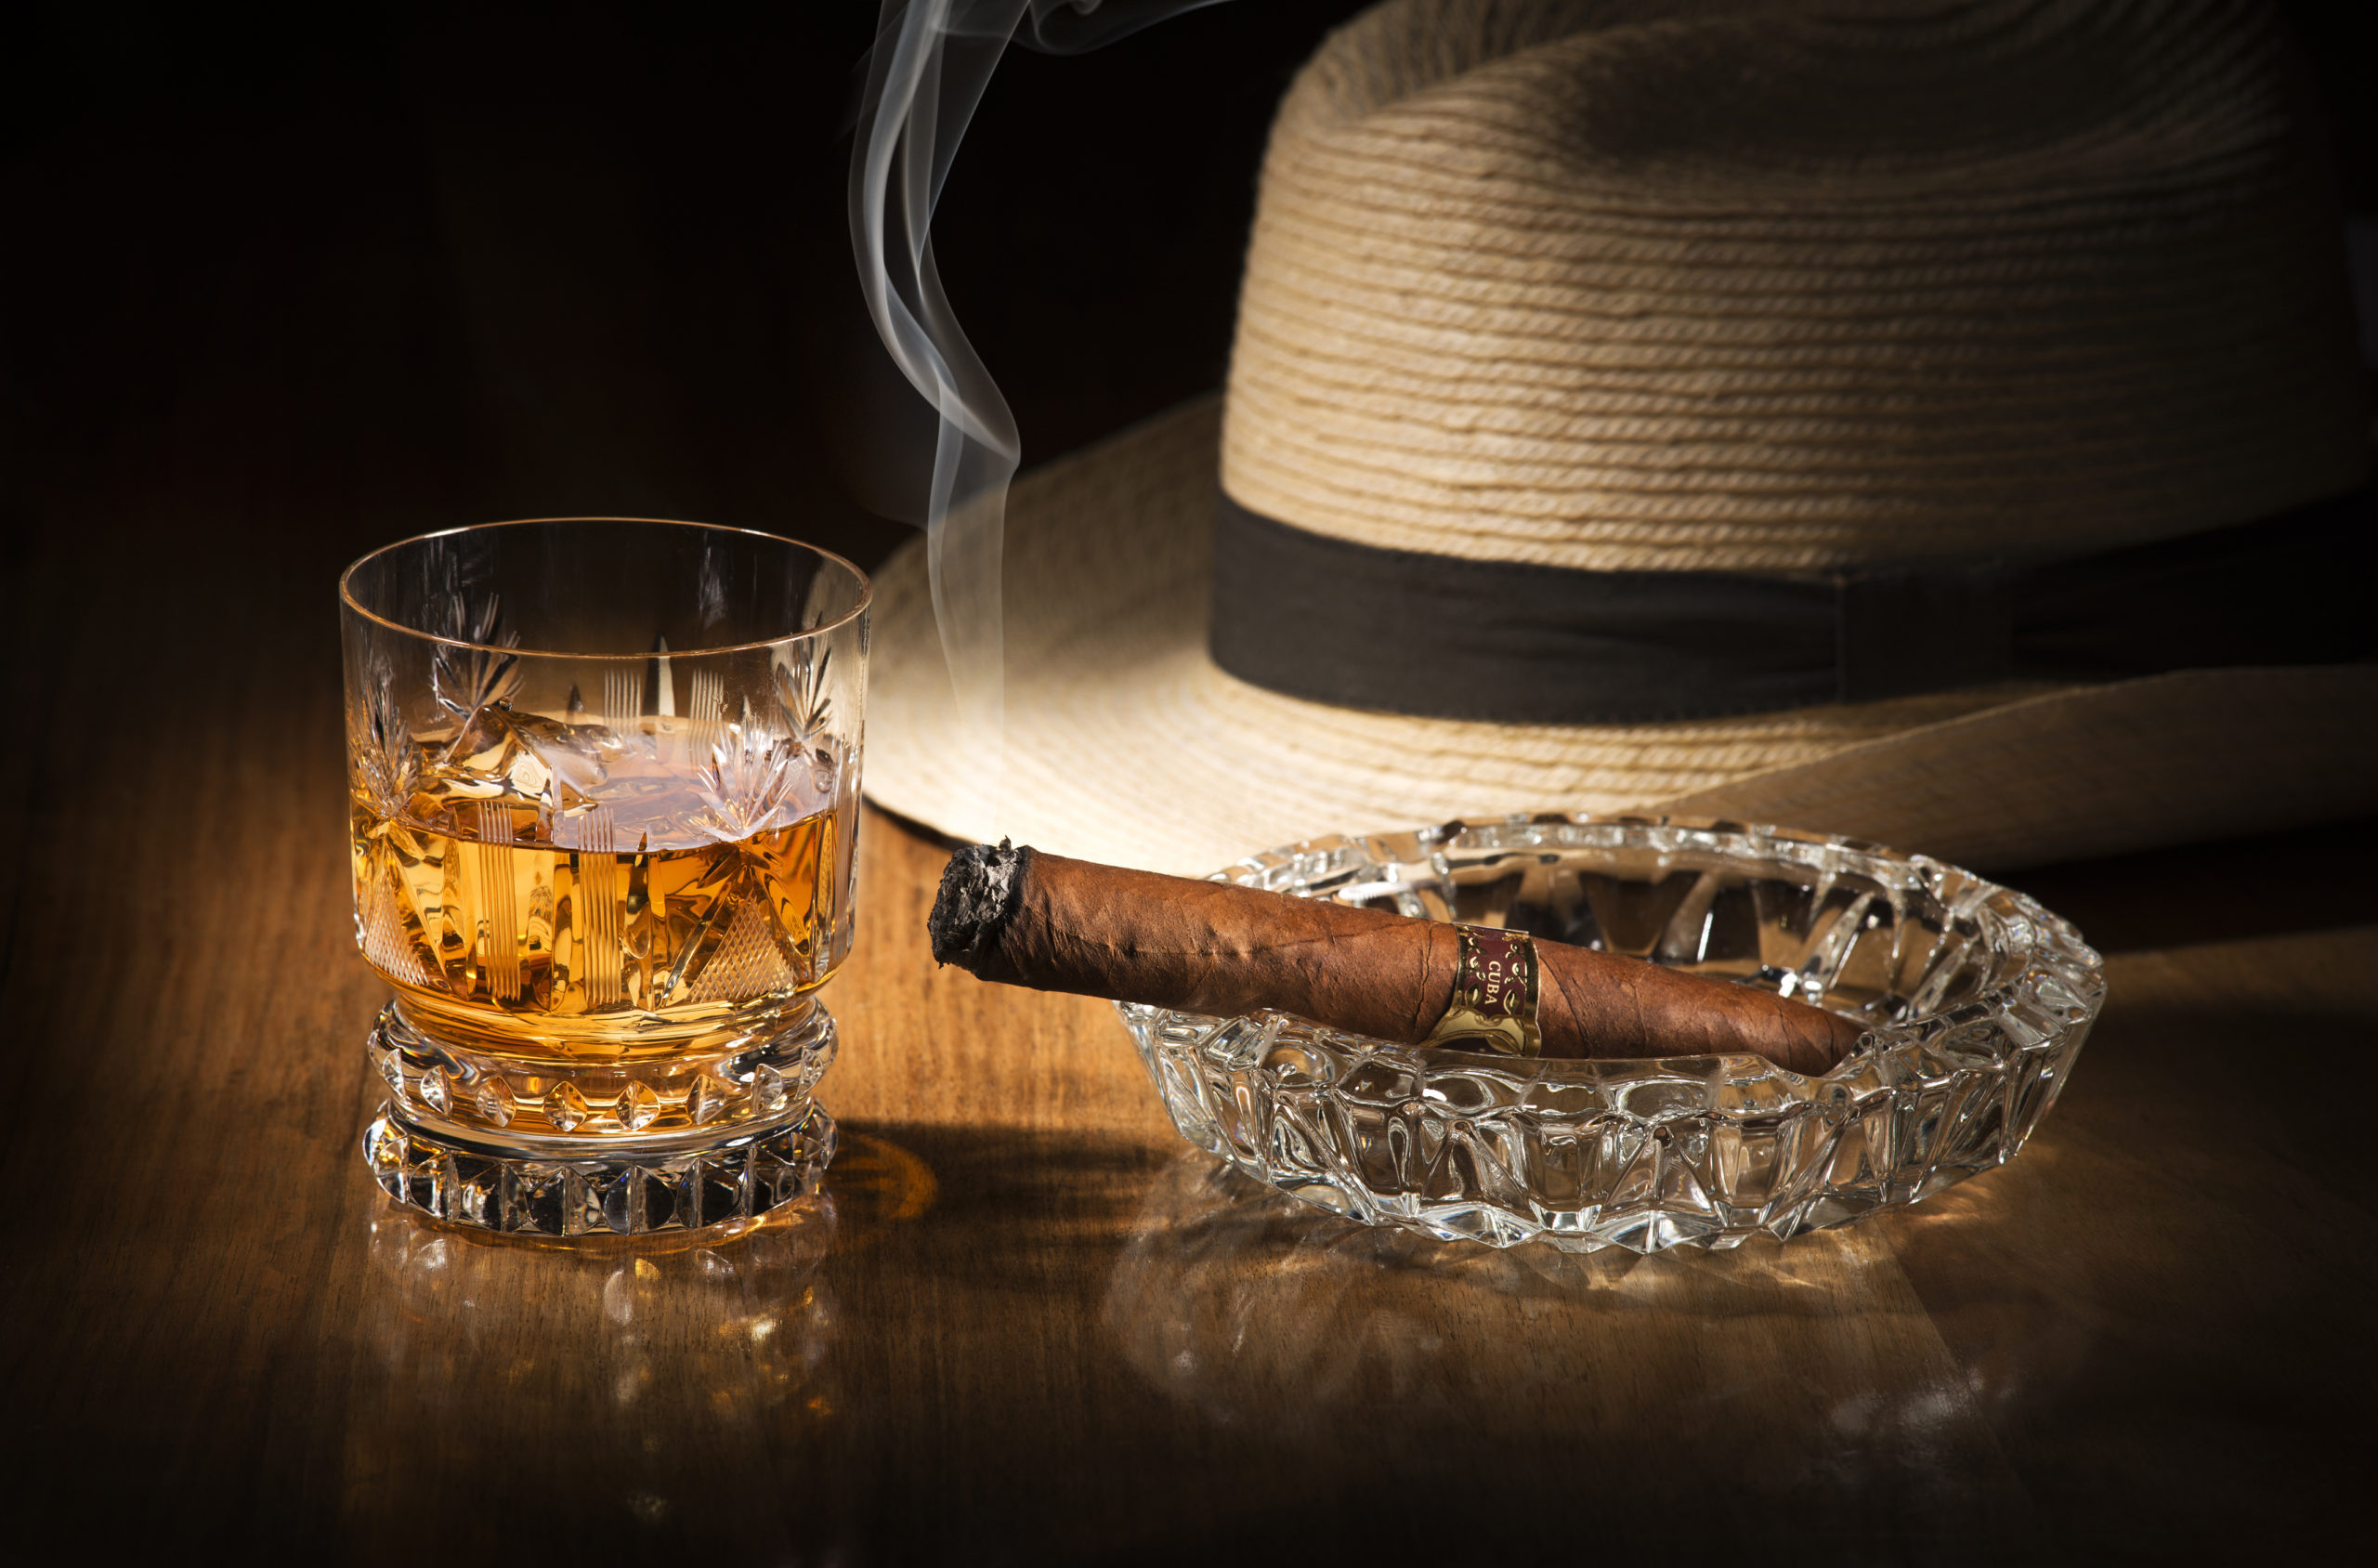 Cuban hat and cigar